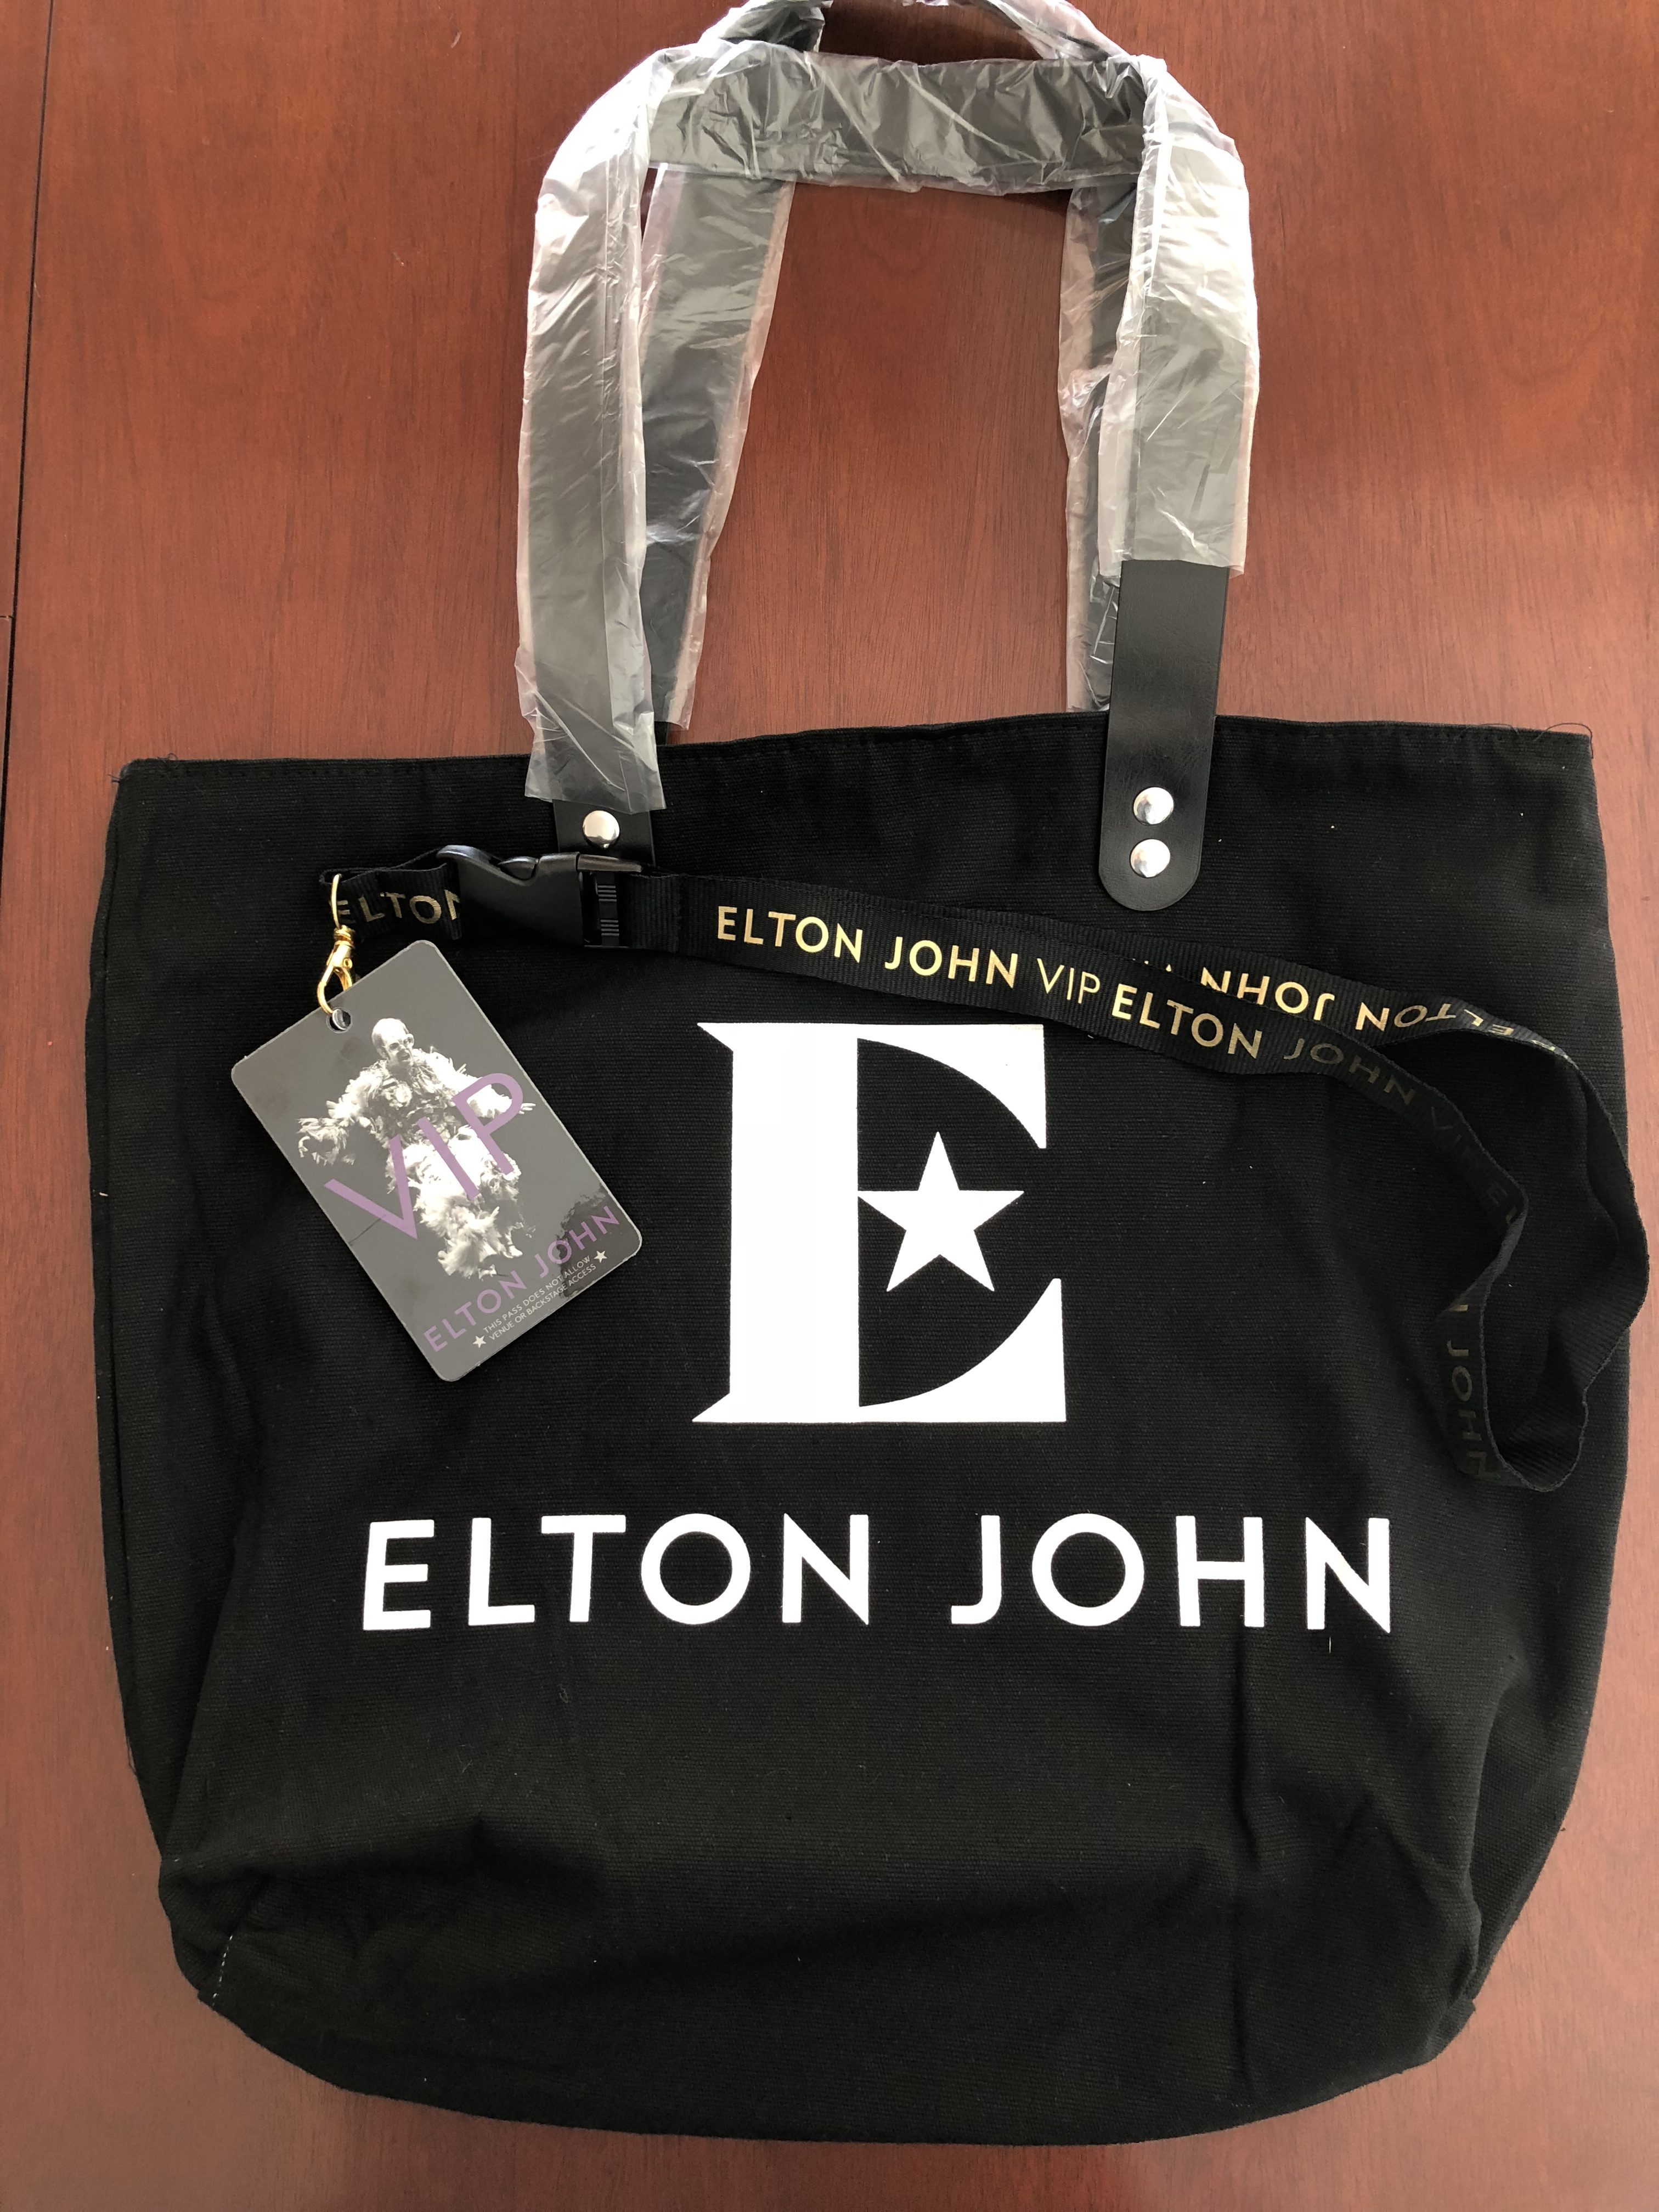 VIP Elton John Gift Bag With VIP Card And Lanyard